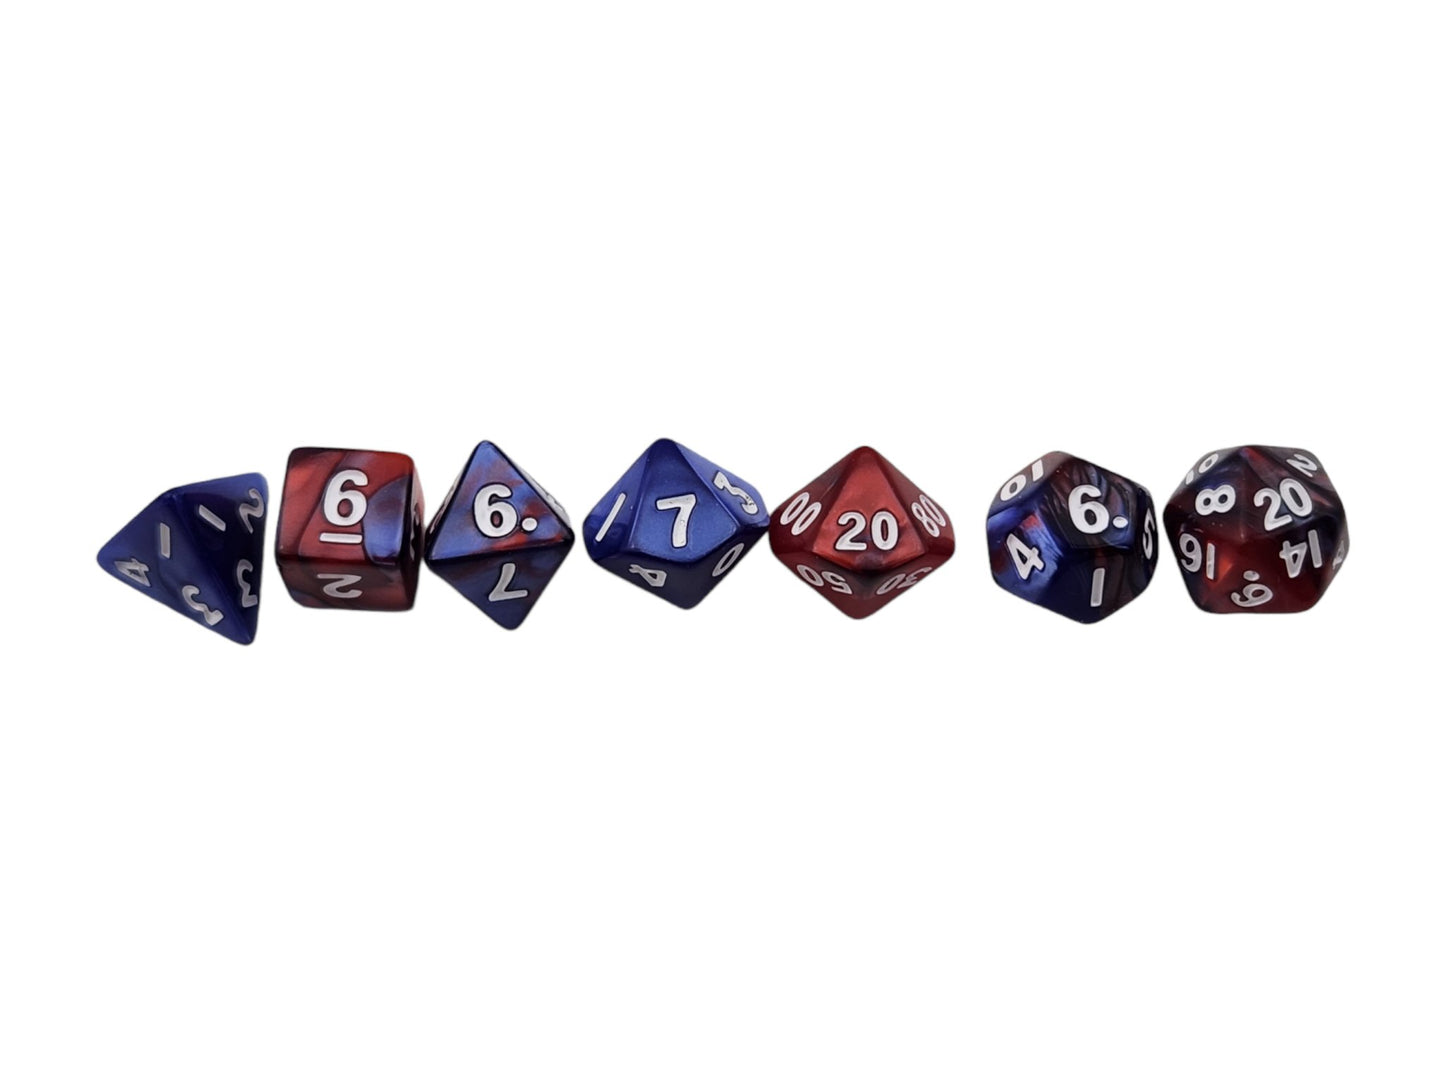 Copy of mini dice set, Mage Fire - Rowan Gate